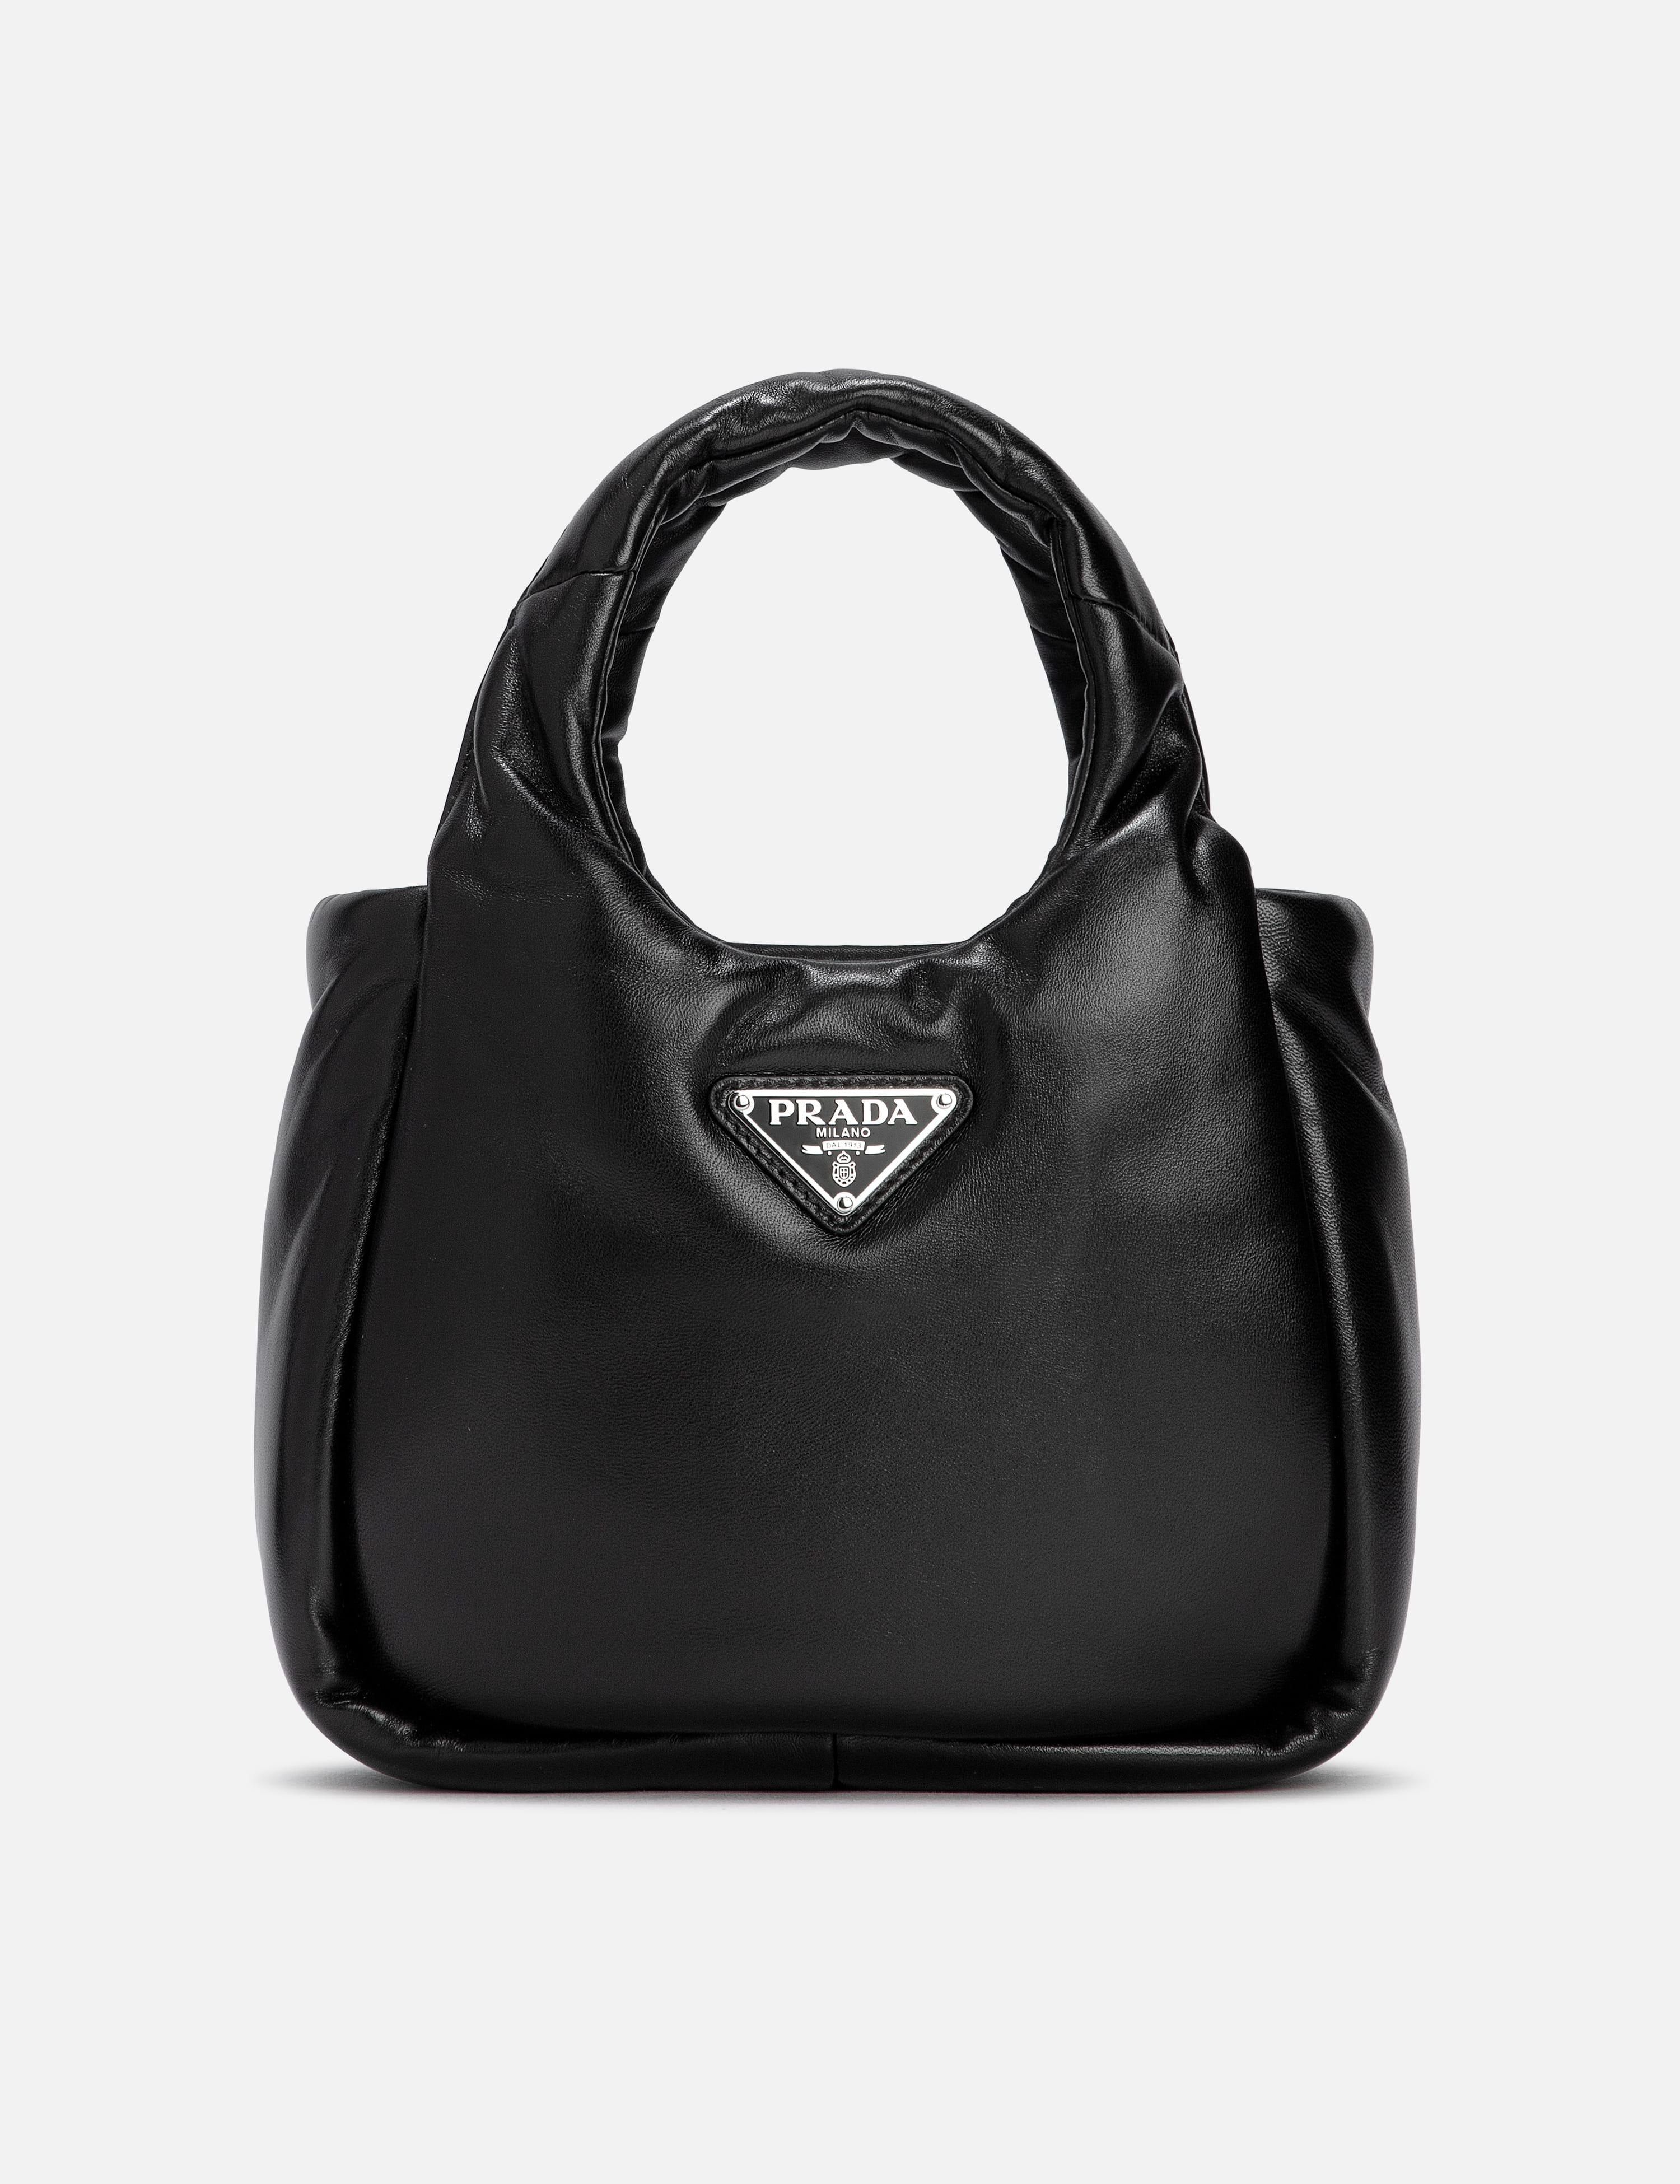 Prada Women's black bags | OTTODISANPIETRO